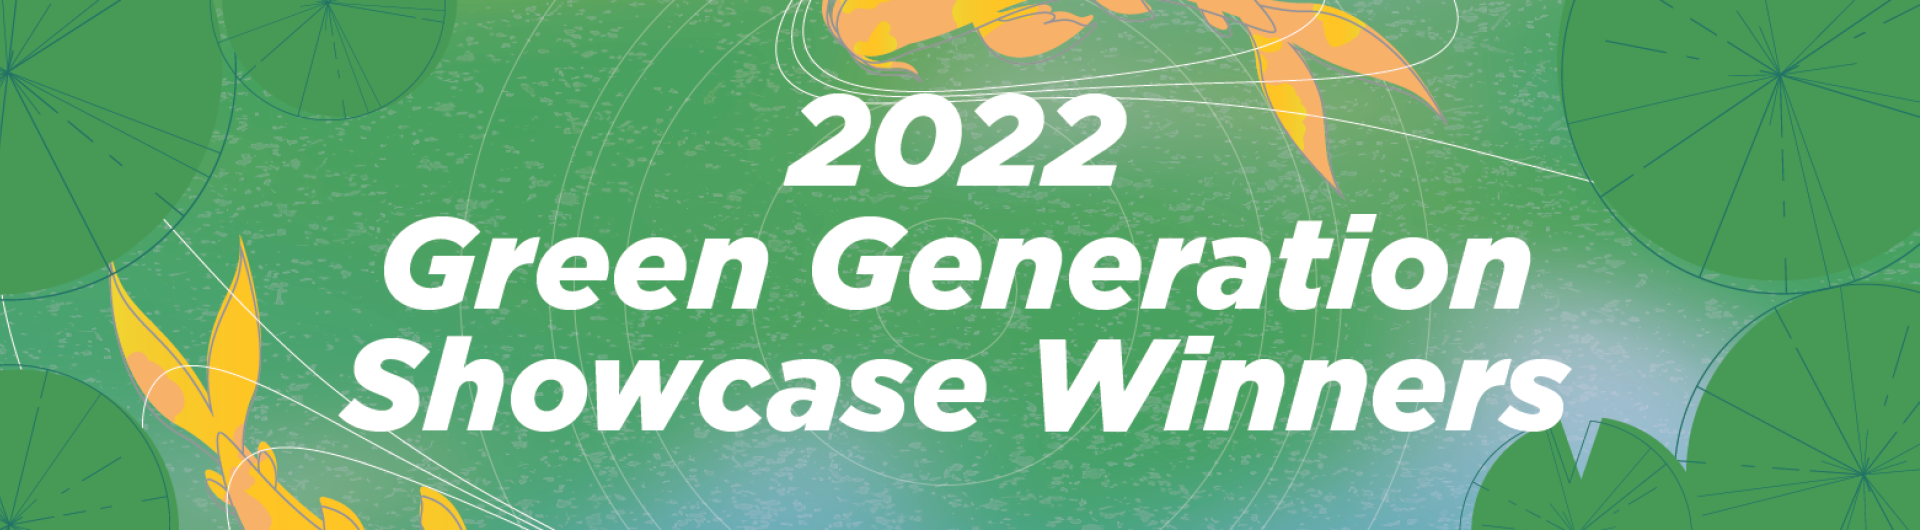 Green Generation Showcase Winners